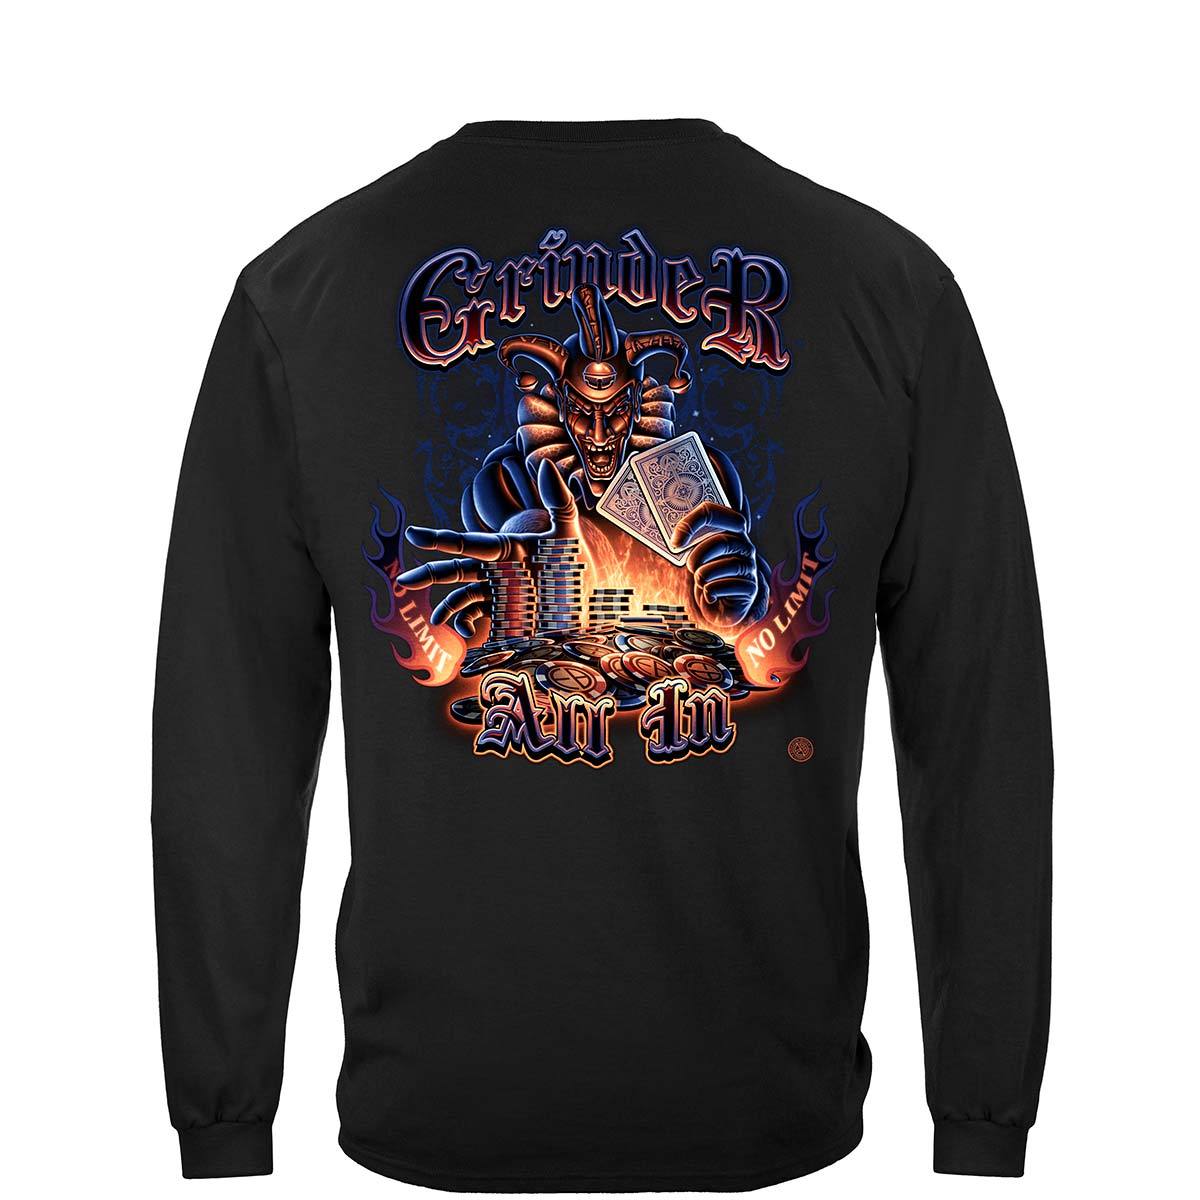 Grinder Premium T-Shirt